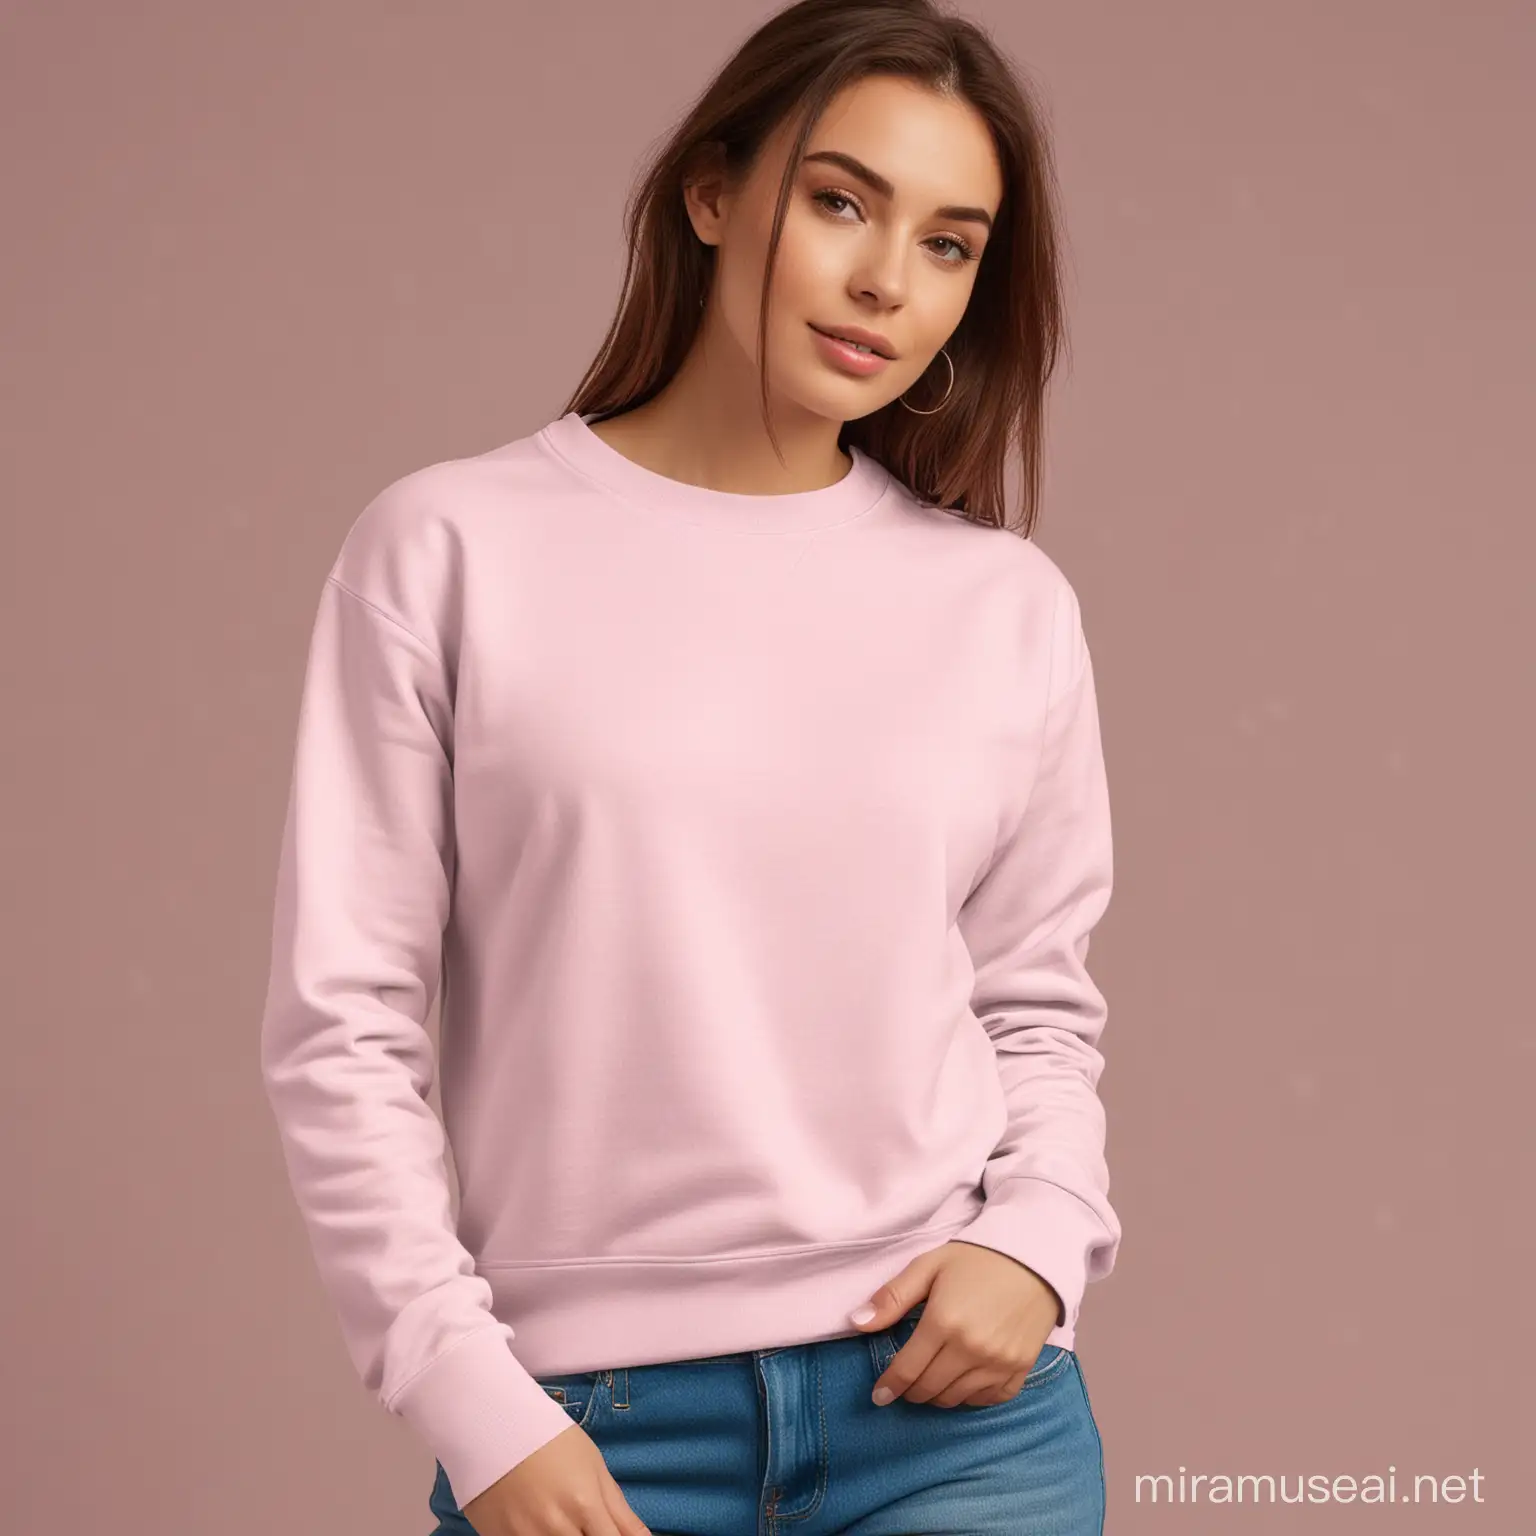 Gildan 18000 mockup in light pink with a blank sweatshirt, female model, no hands,